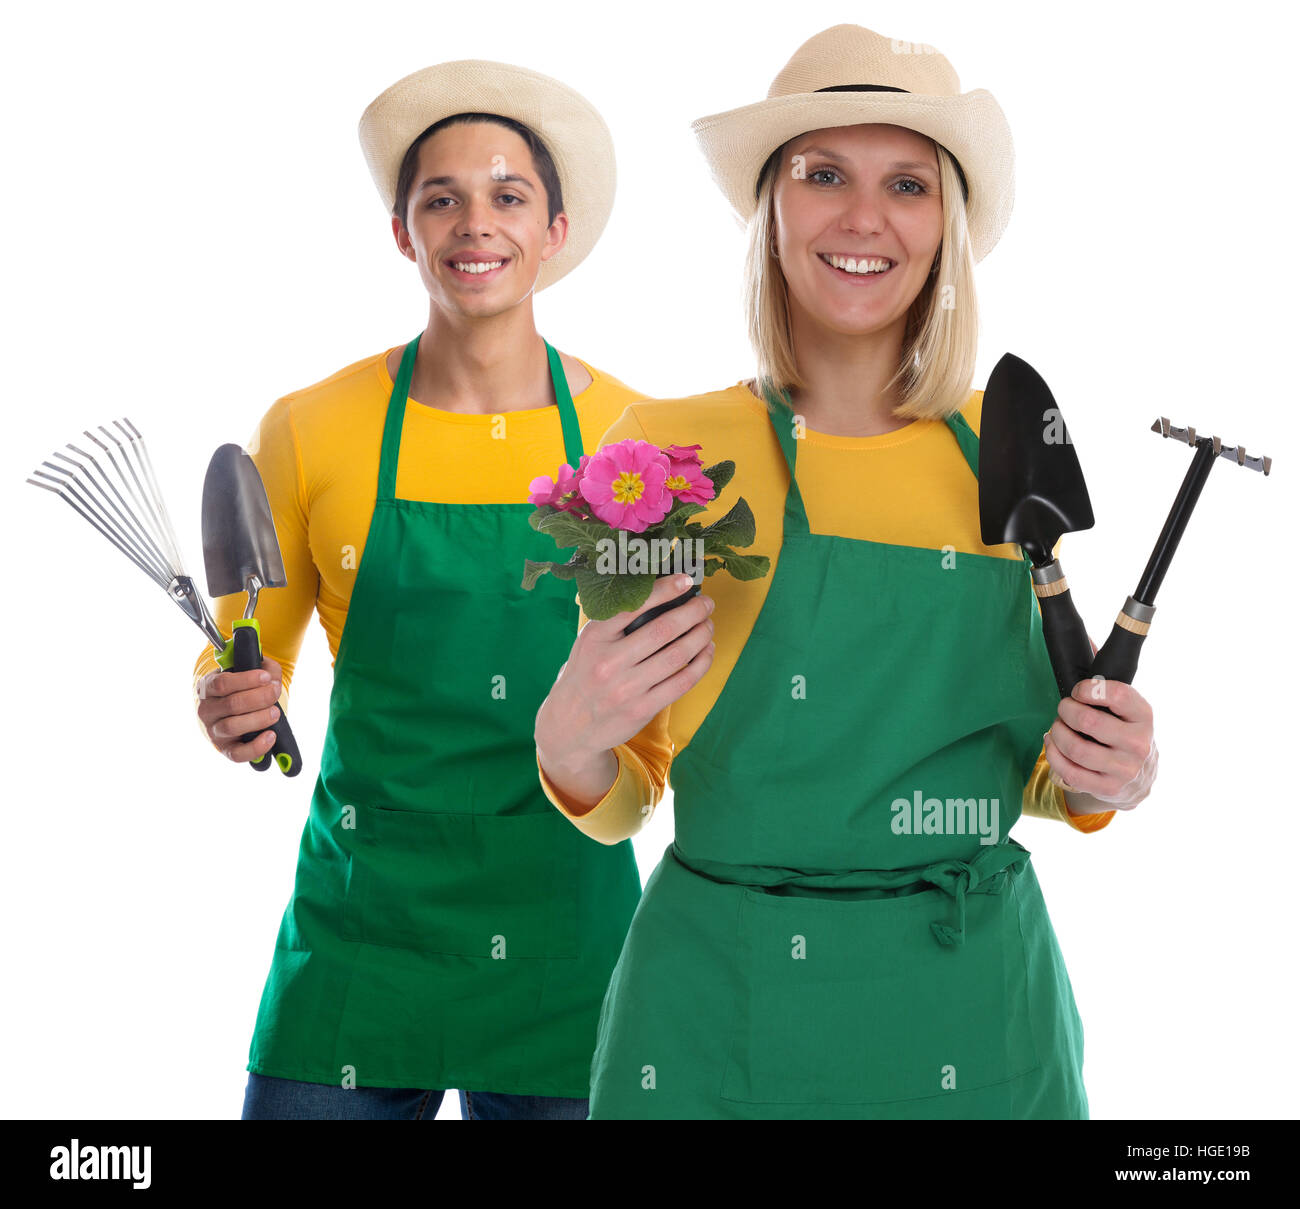 Gardener gardner team flower gardening garden tools occupation job isolated on a white background Stock Photo